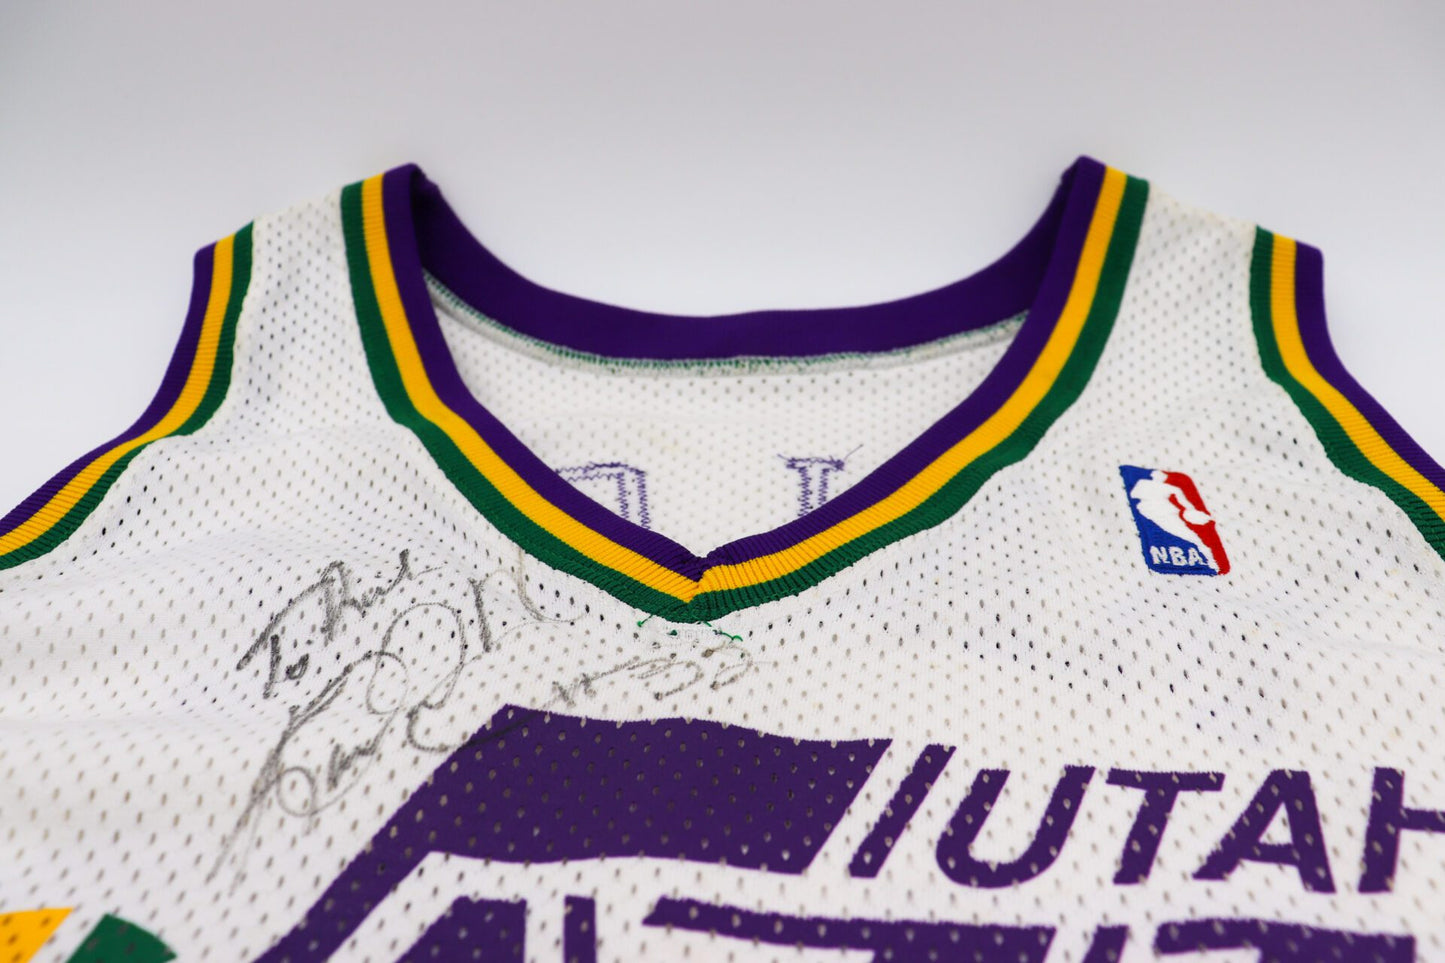 Karl Malone Signed Authentic Utah Jazz Jersey. Basketball, Lot #40123